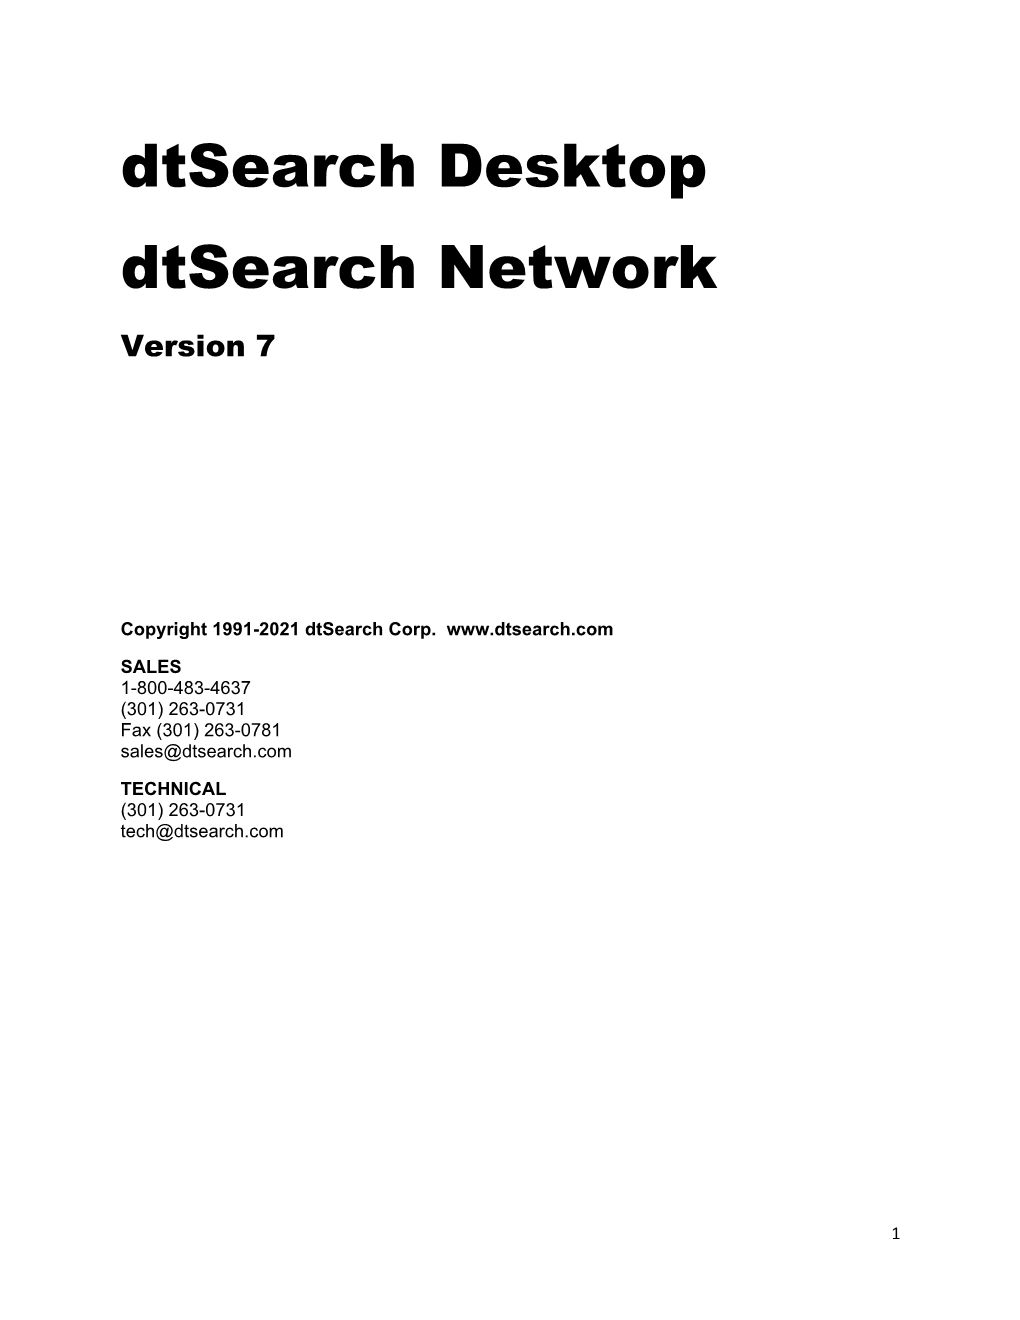 Dtsearch Desktop/Dtsearch Network Manual